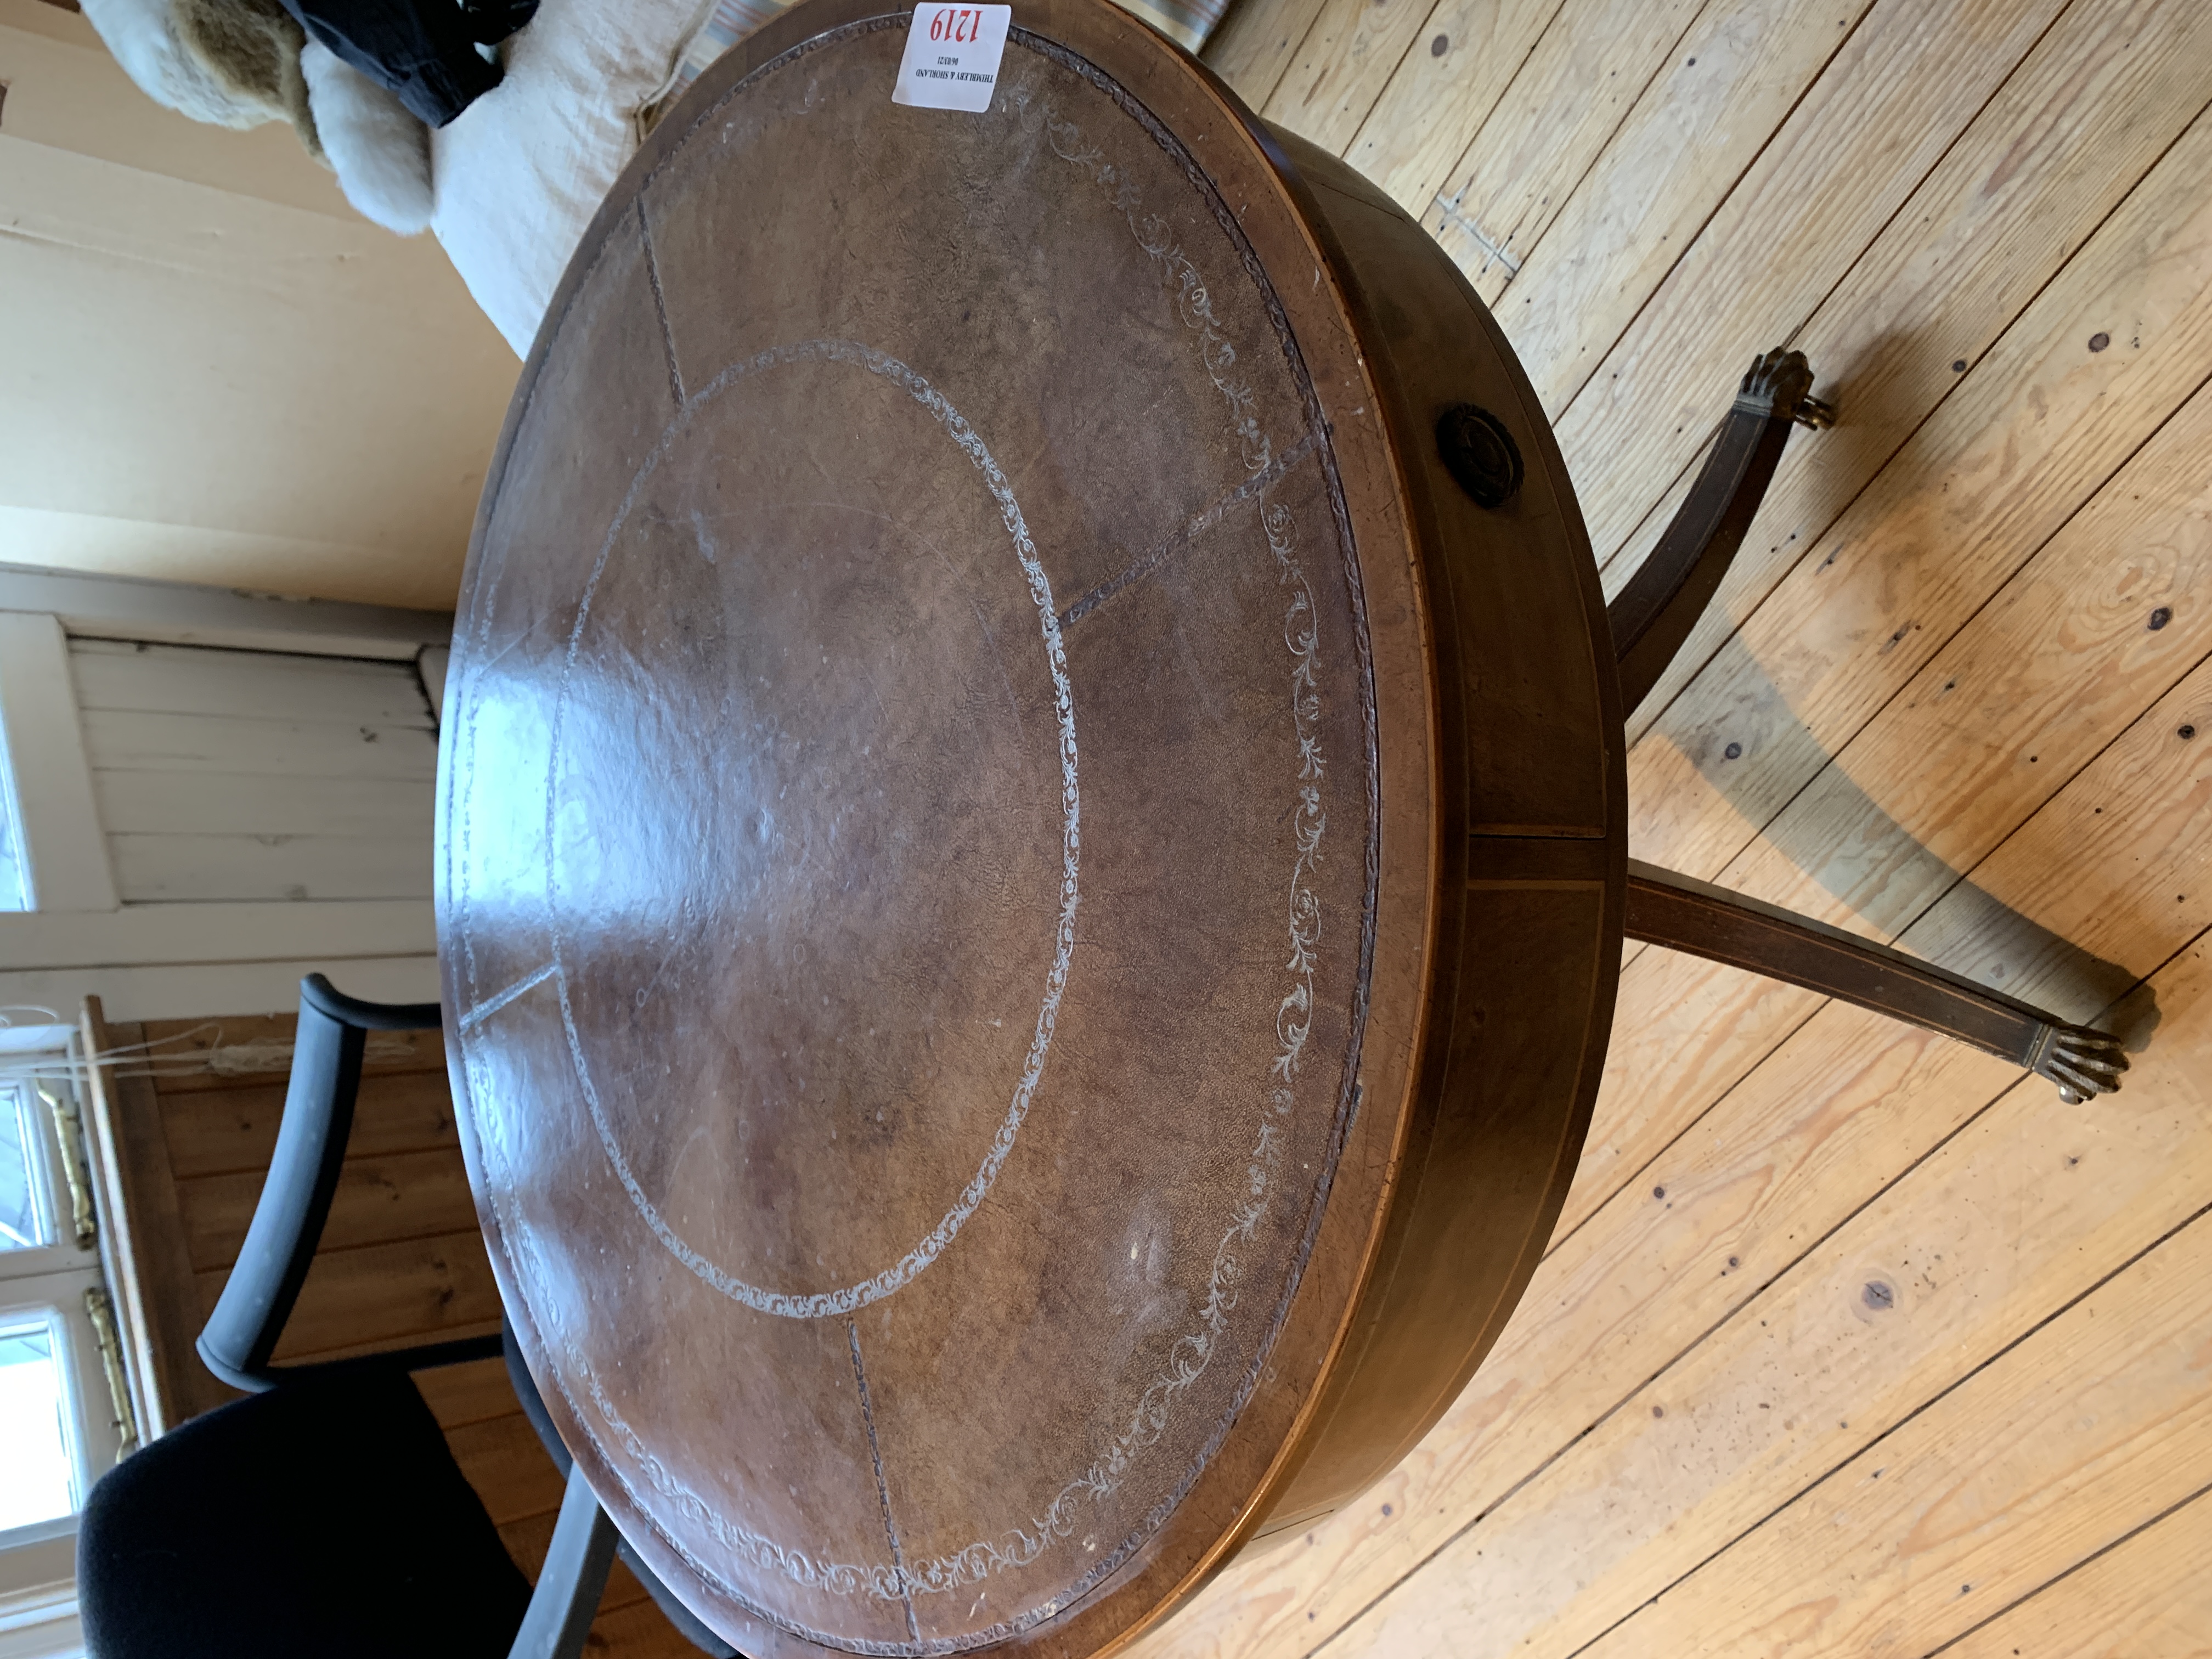 Mahogany drum table